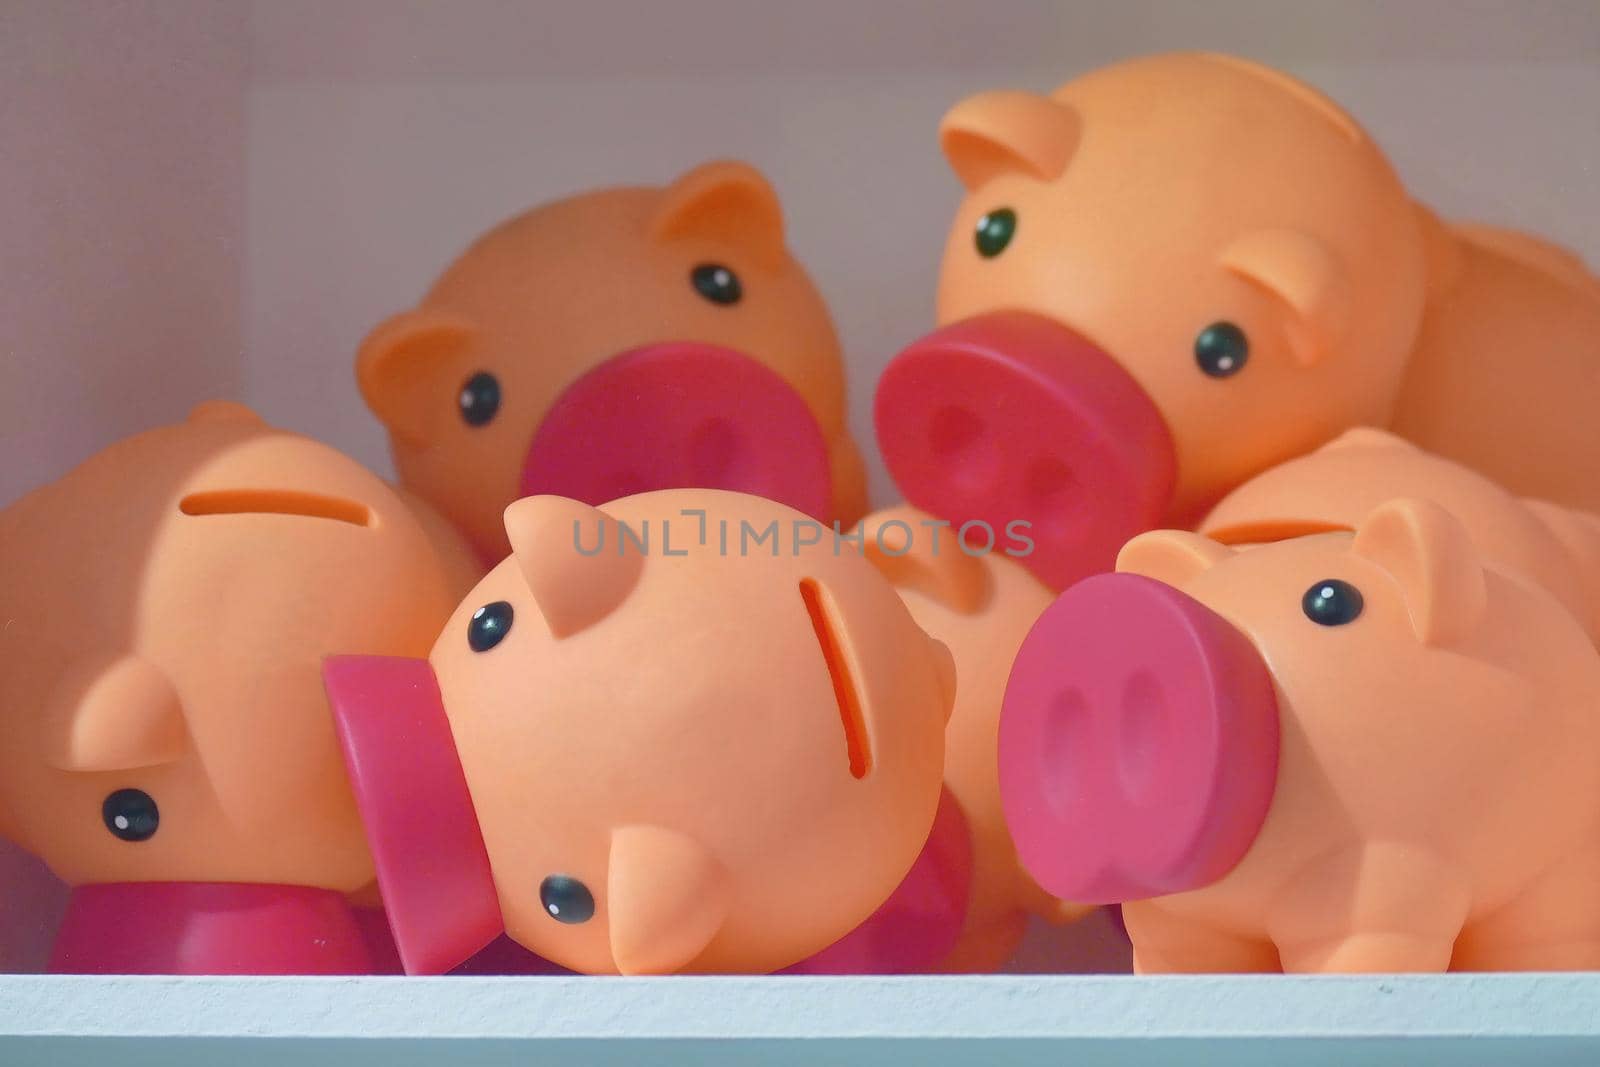 Toy piggy banks closeup view by lemar